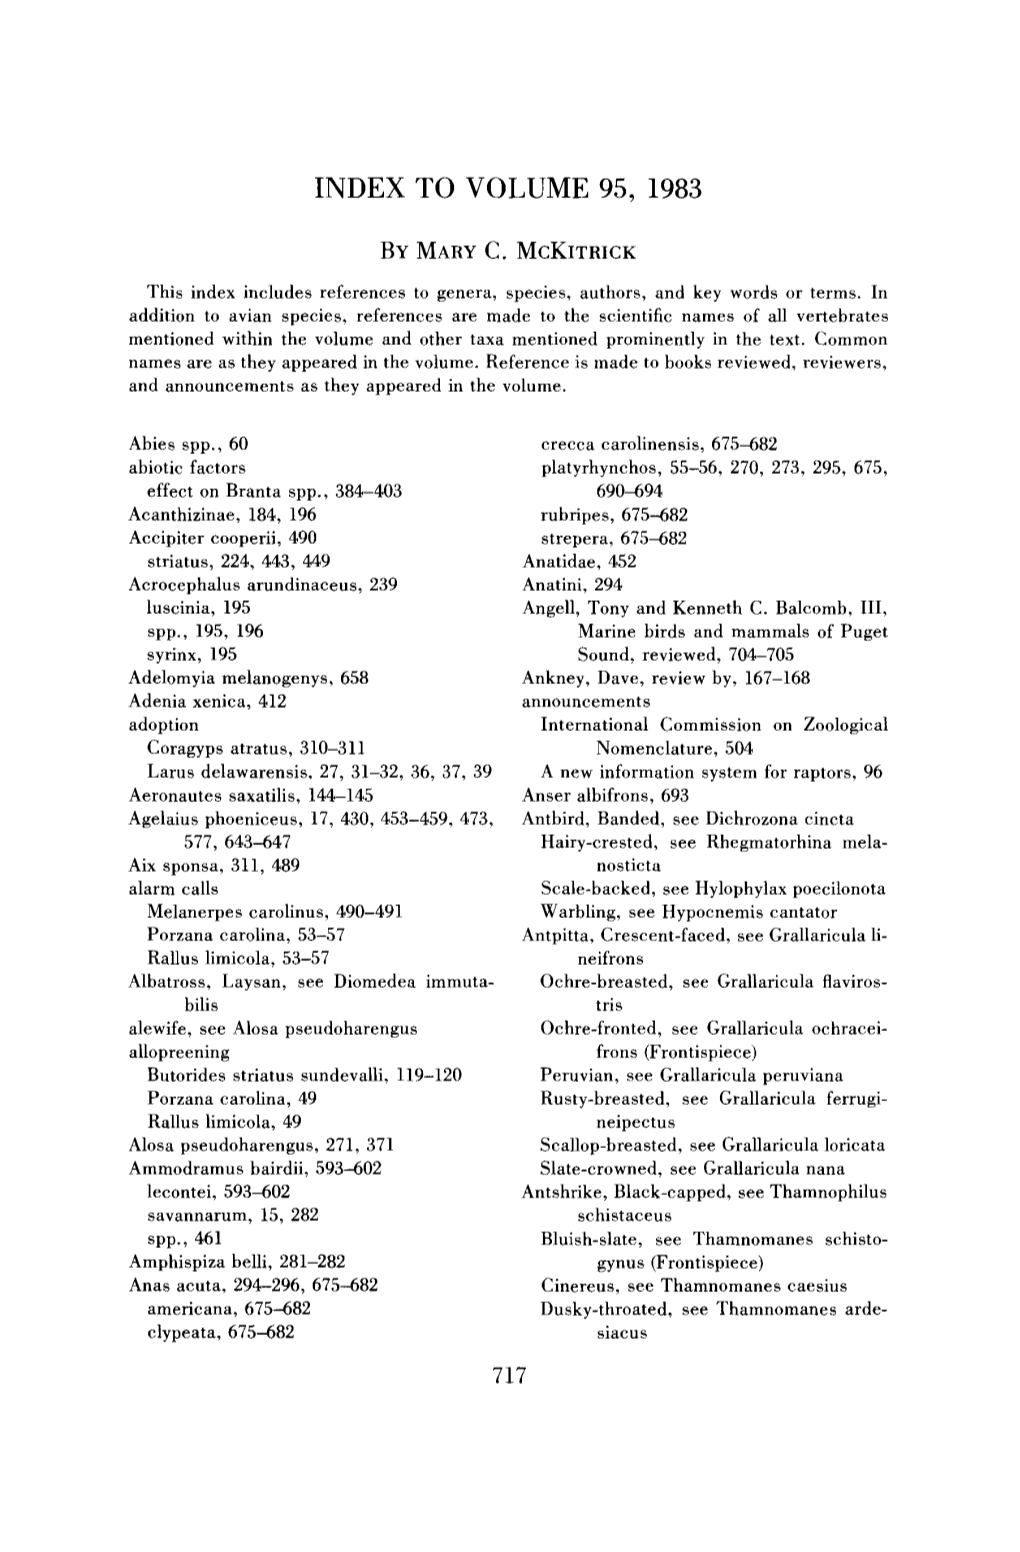 Index to Volume 95, 1983